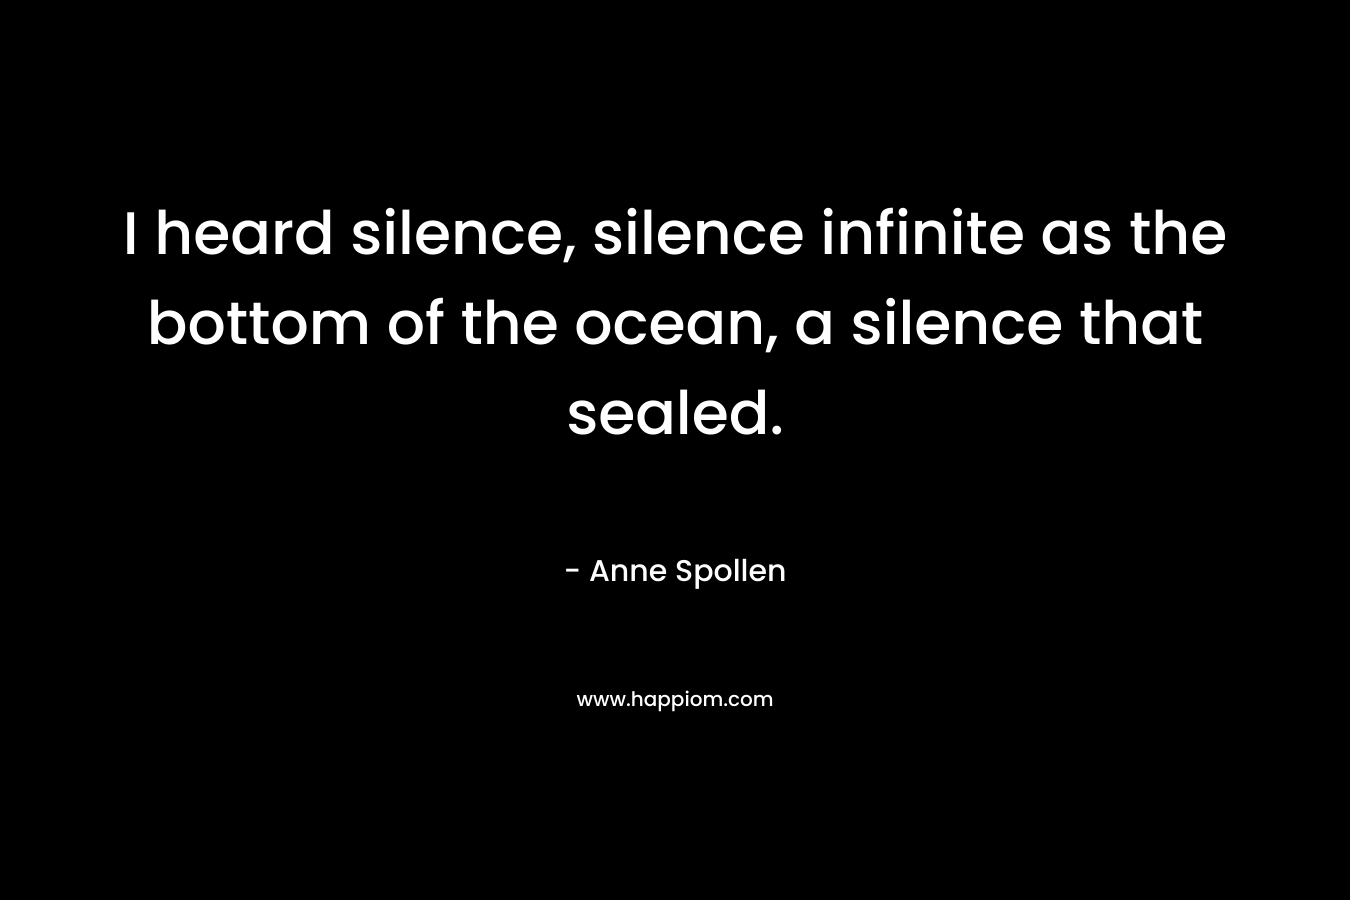 I heard silence, silence infinite as the bottom of the ocean, a silence that sealed.